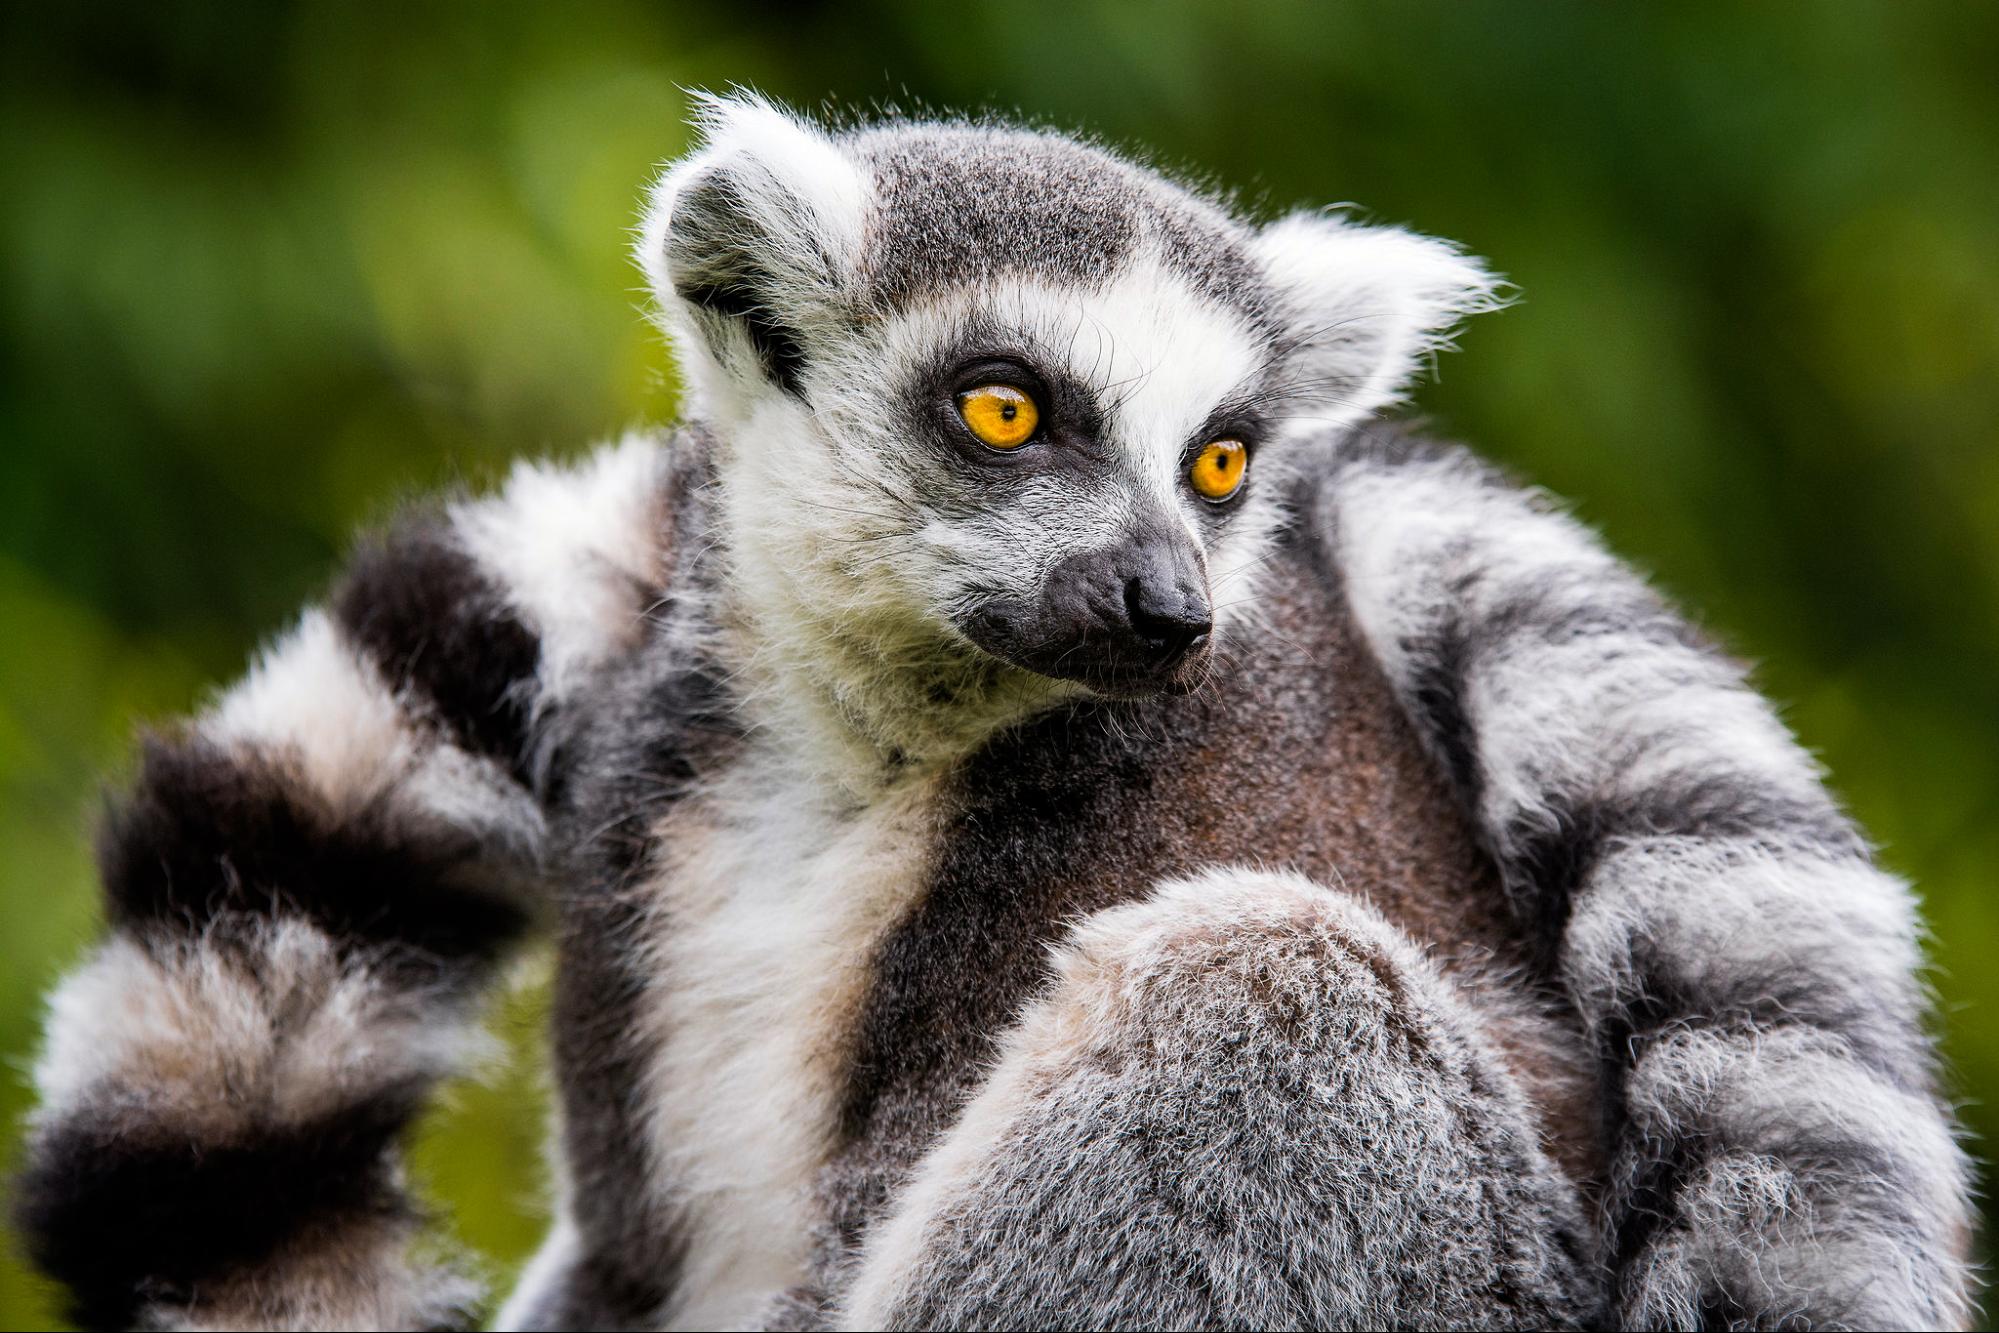 Madagascar’s Unique Wildlife Faces Imminent Wave of Extinction, Scientists Say